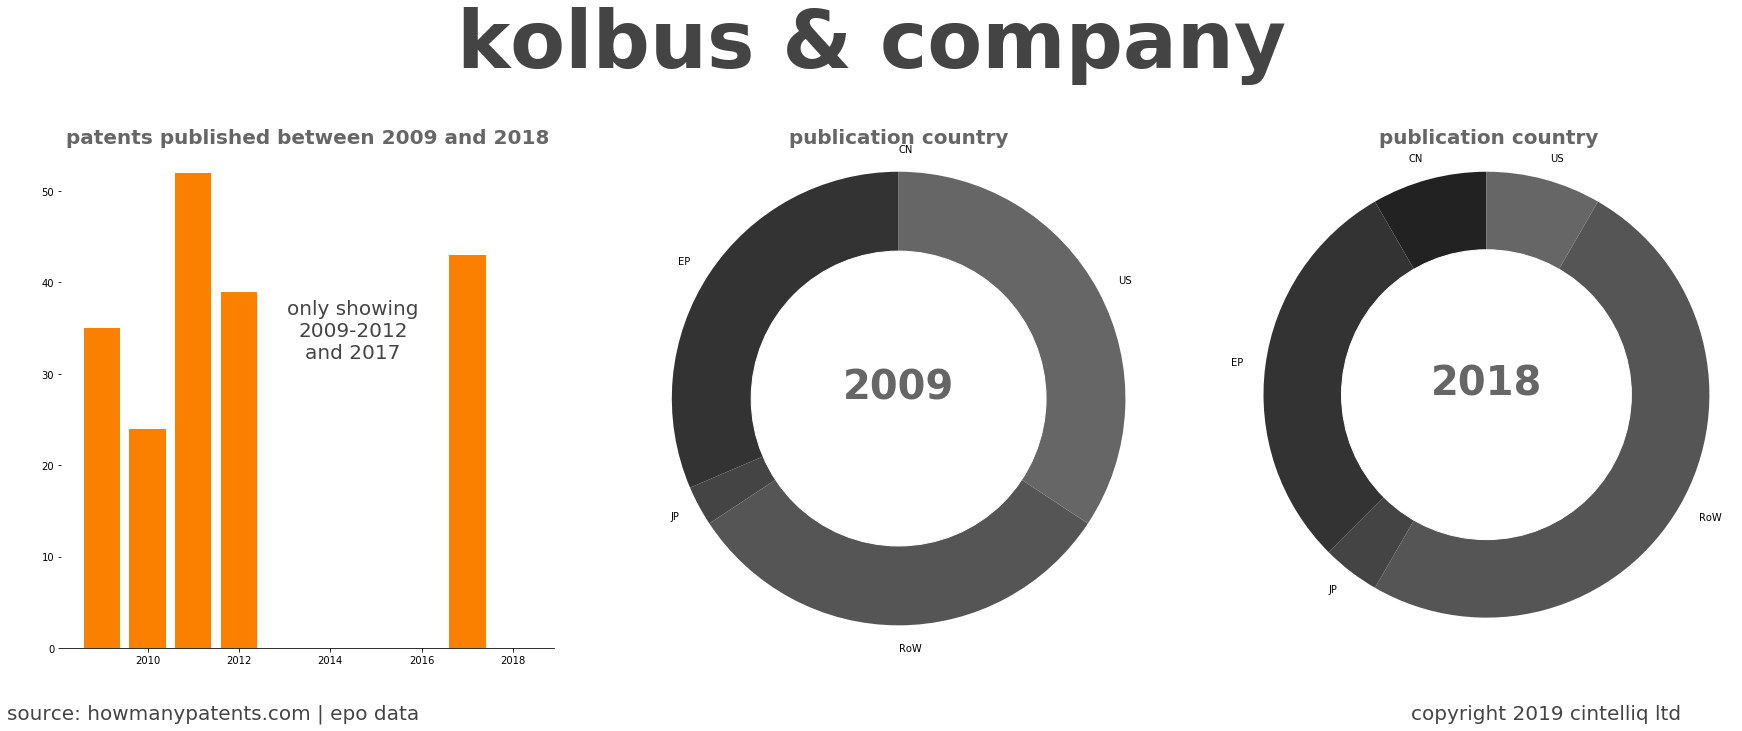 summary of patents for Kolbus & Company